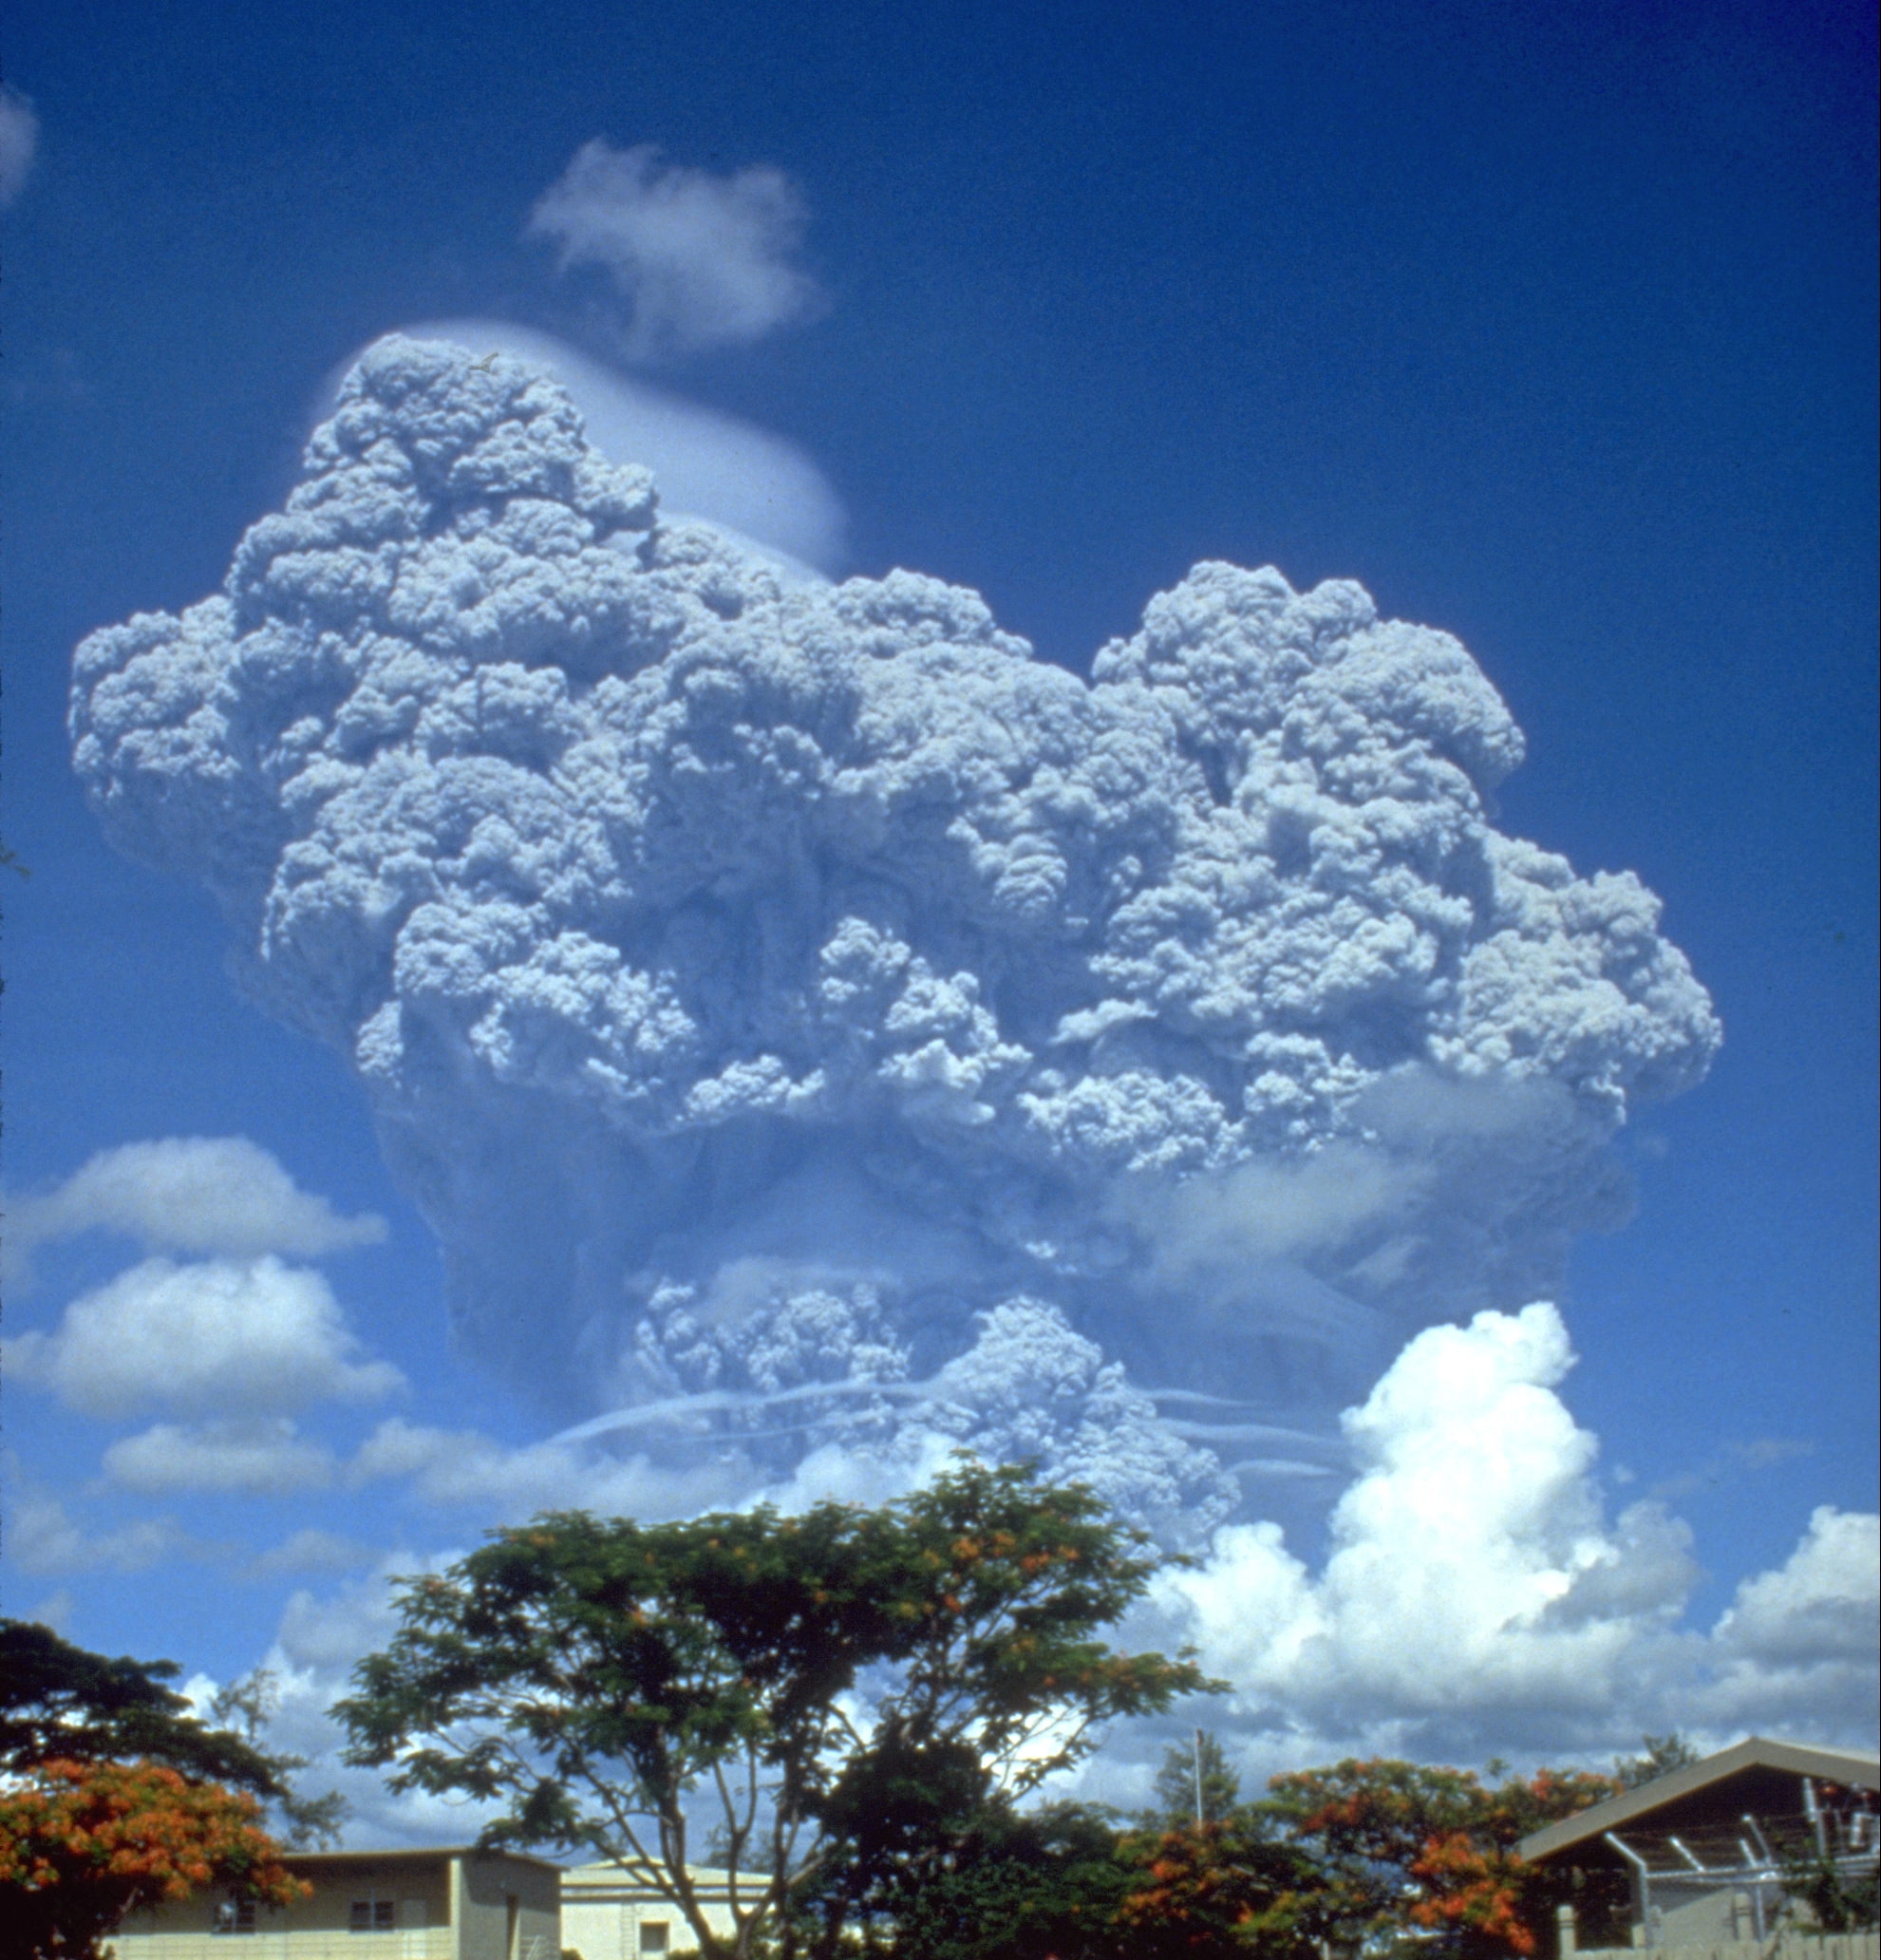 Pinatubo dagi patlamasi bildircin kudret helvasi musa peygamber misir 